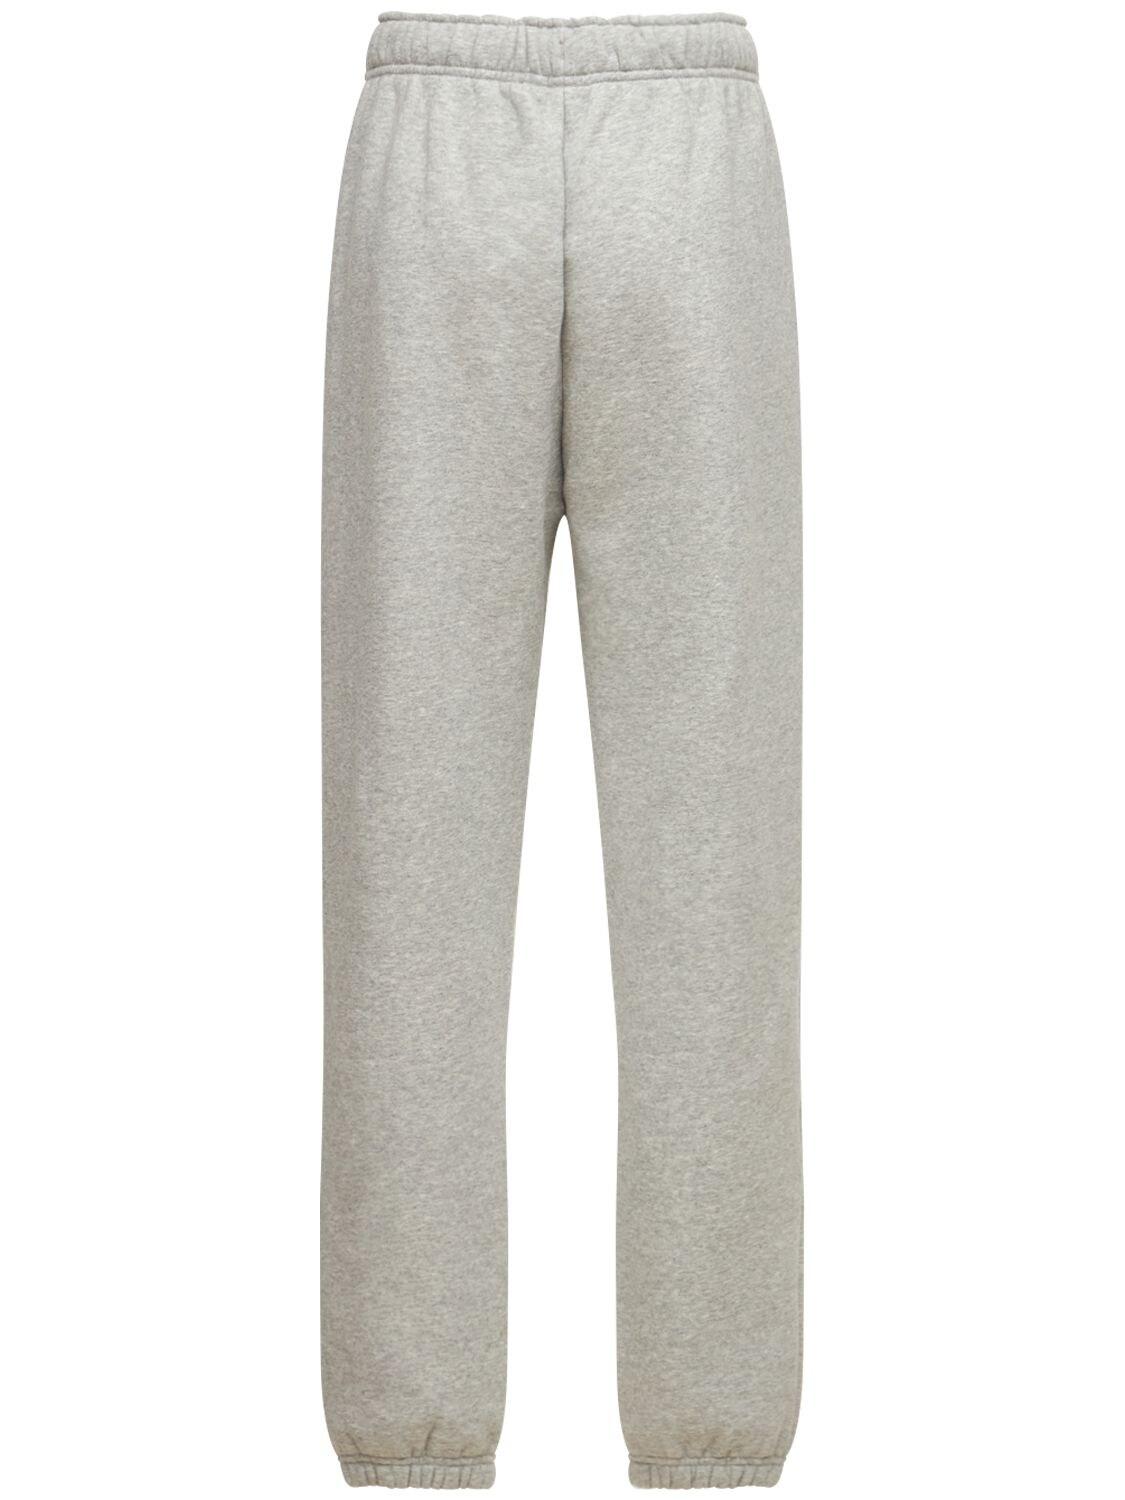 Alo Yoga Accolade High Waist Sweatpants in Gray